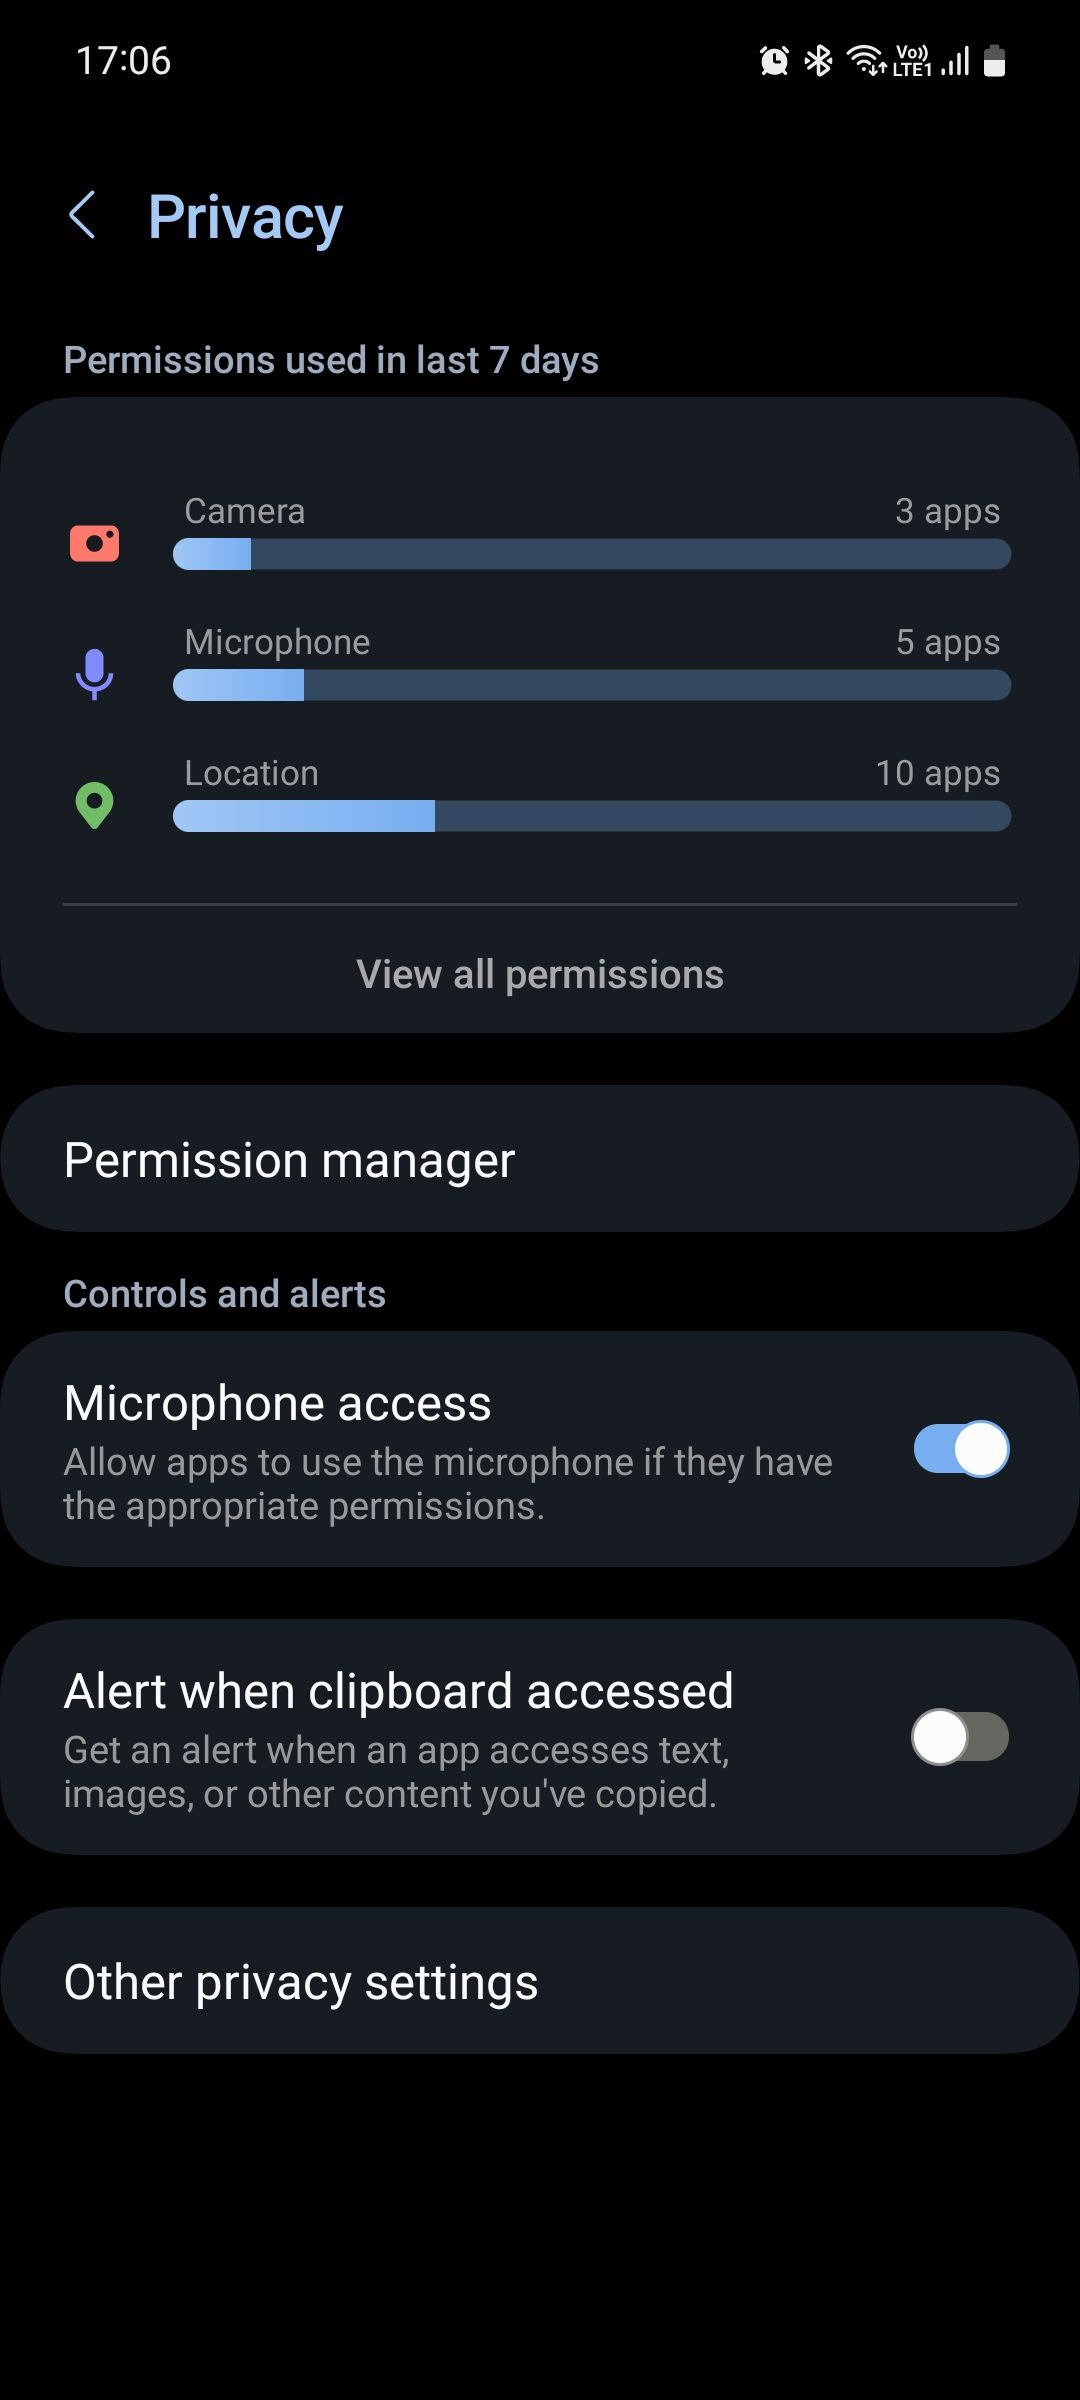 Samsung One UI 5.1 Privacy settings